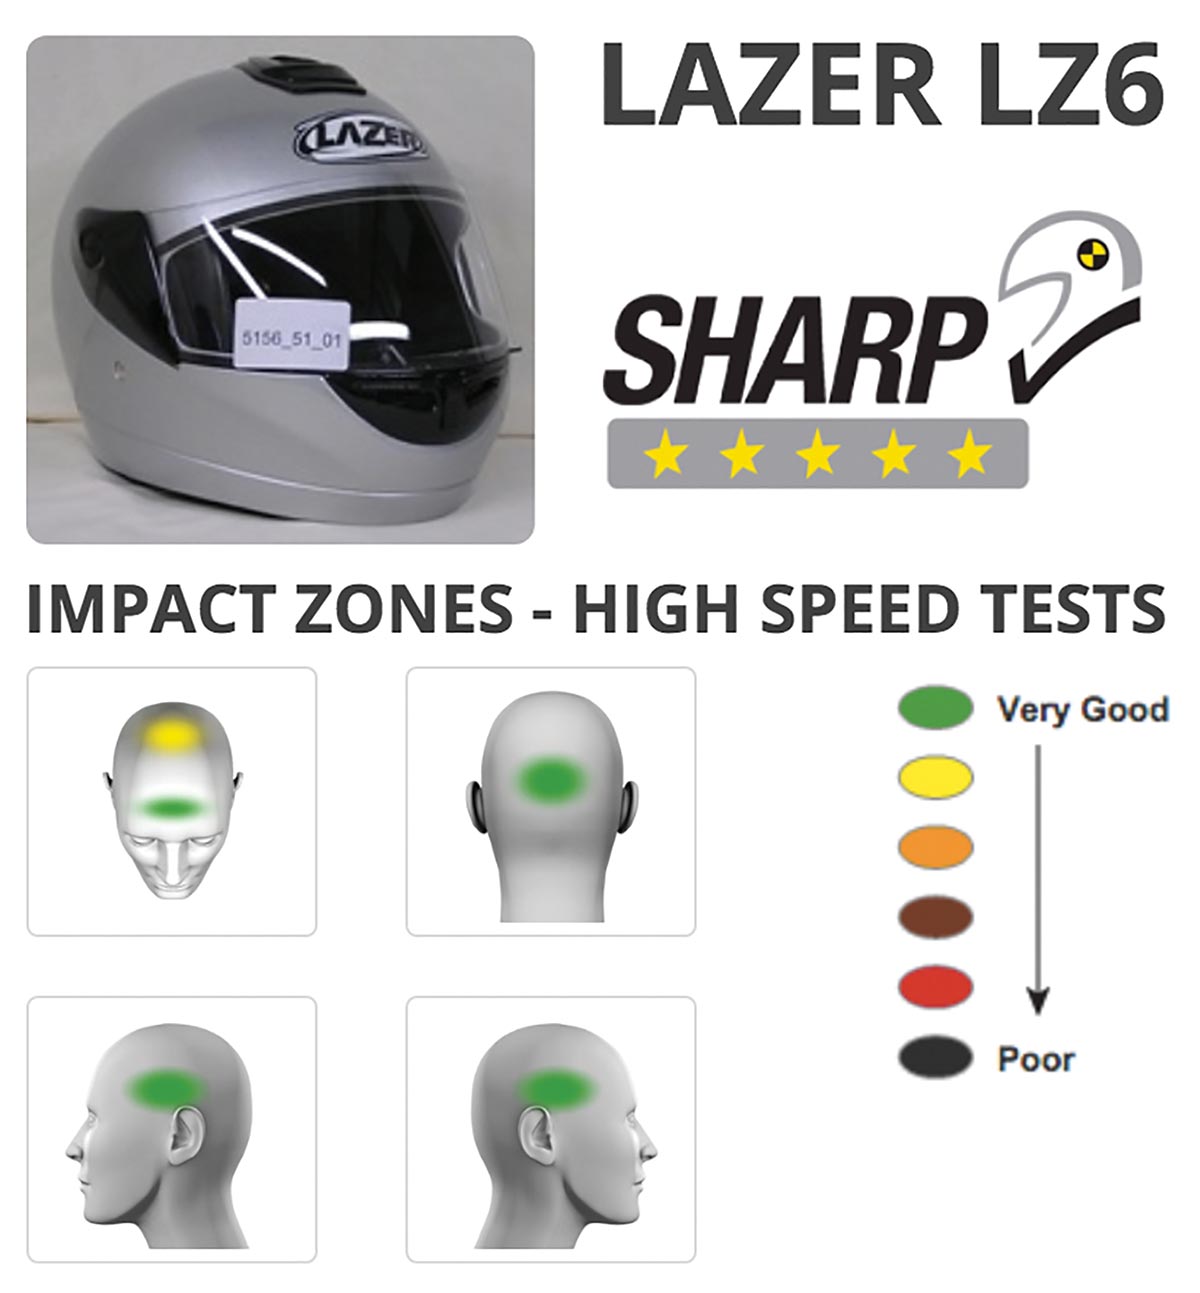 Five star Sharp rated Lazer helmet